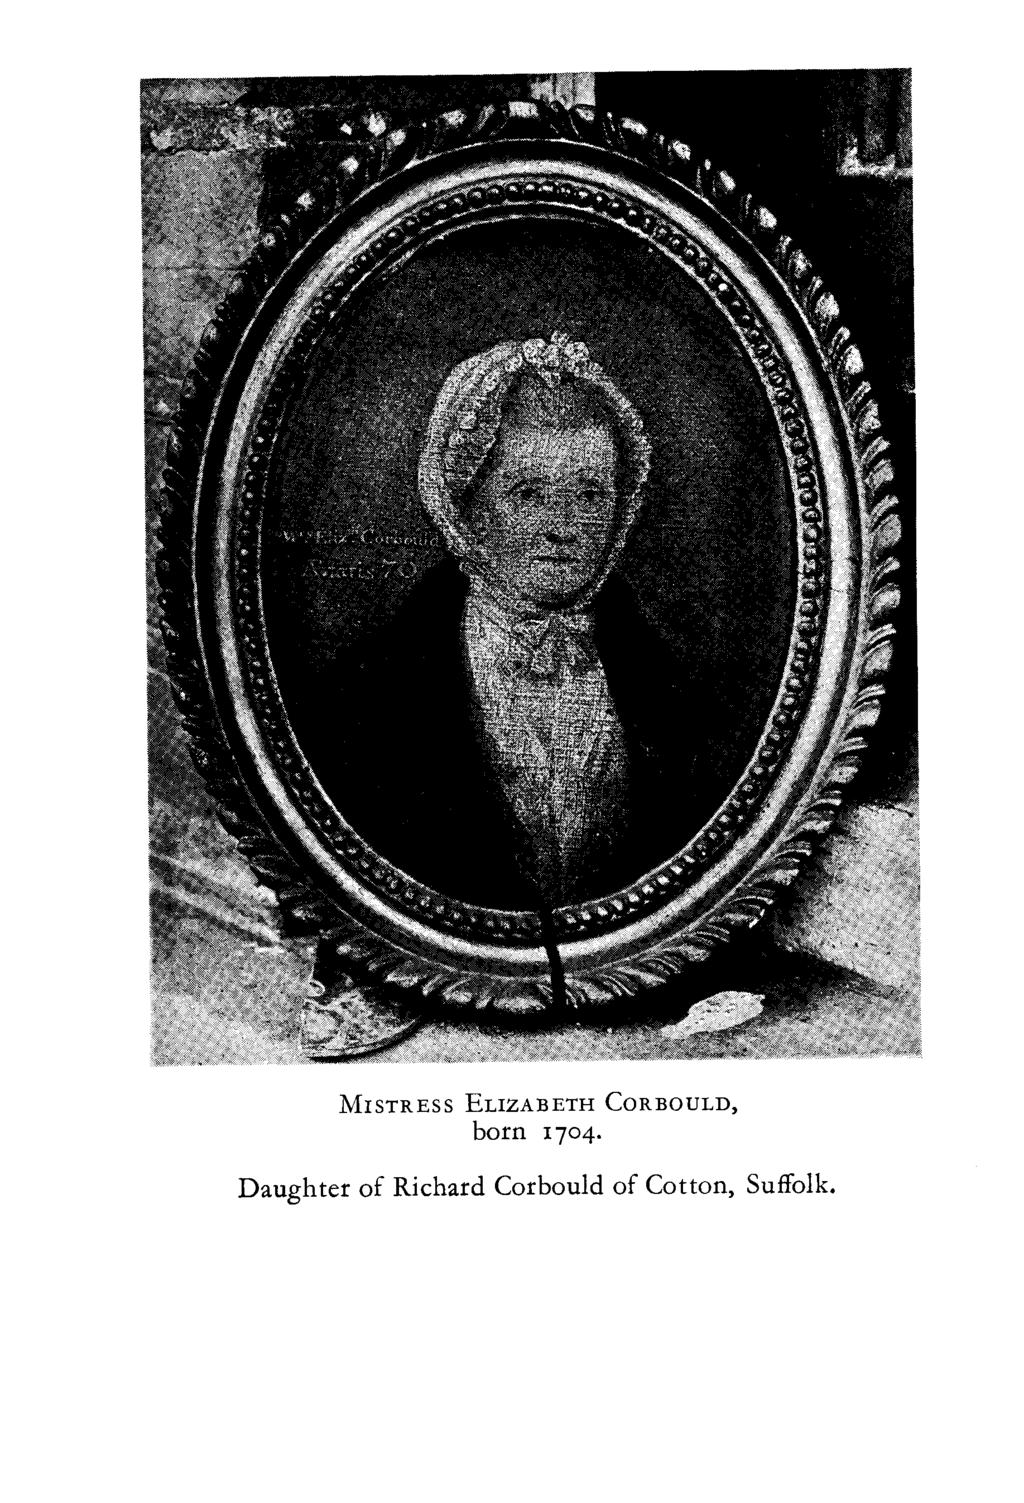 MISTRES s ELIZABETH CORBOULD, born 1704.